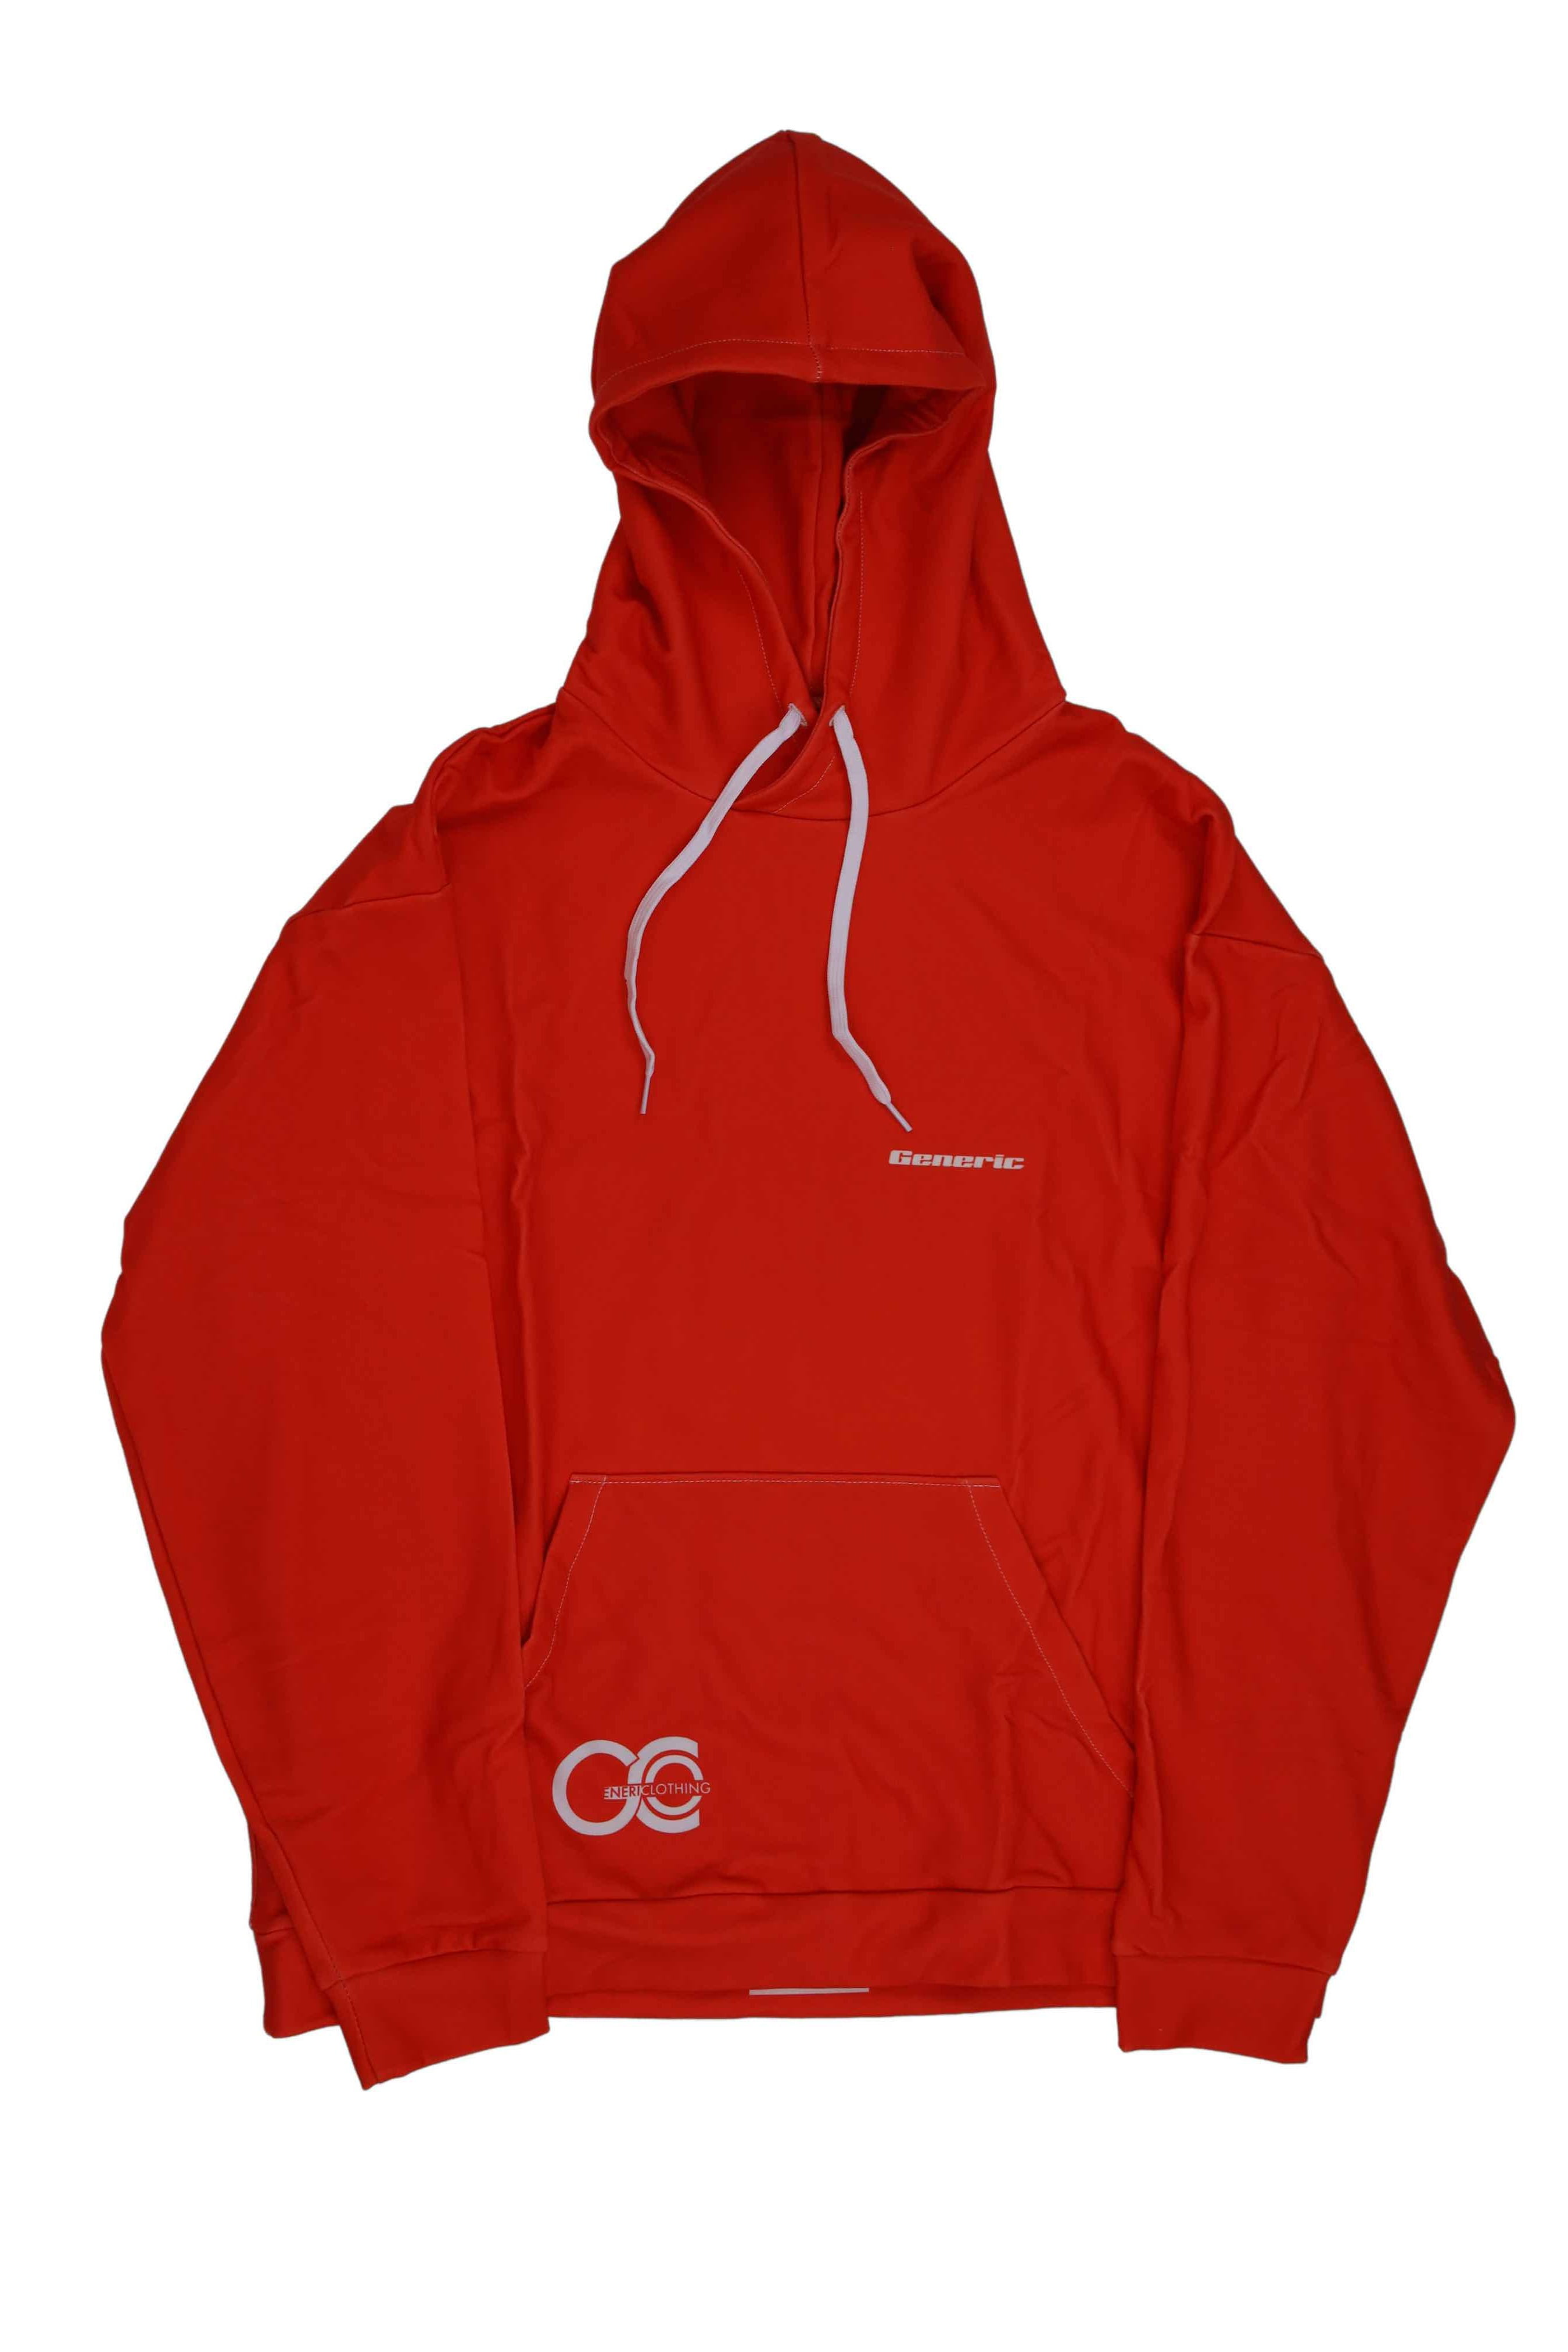 LIFEGUARD Hoodie - Red Sweatshirt Apparel For Women, Men, Teens, Girls -  Unisex.